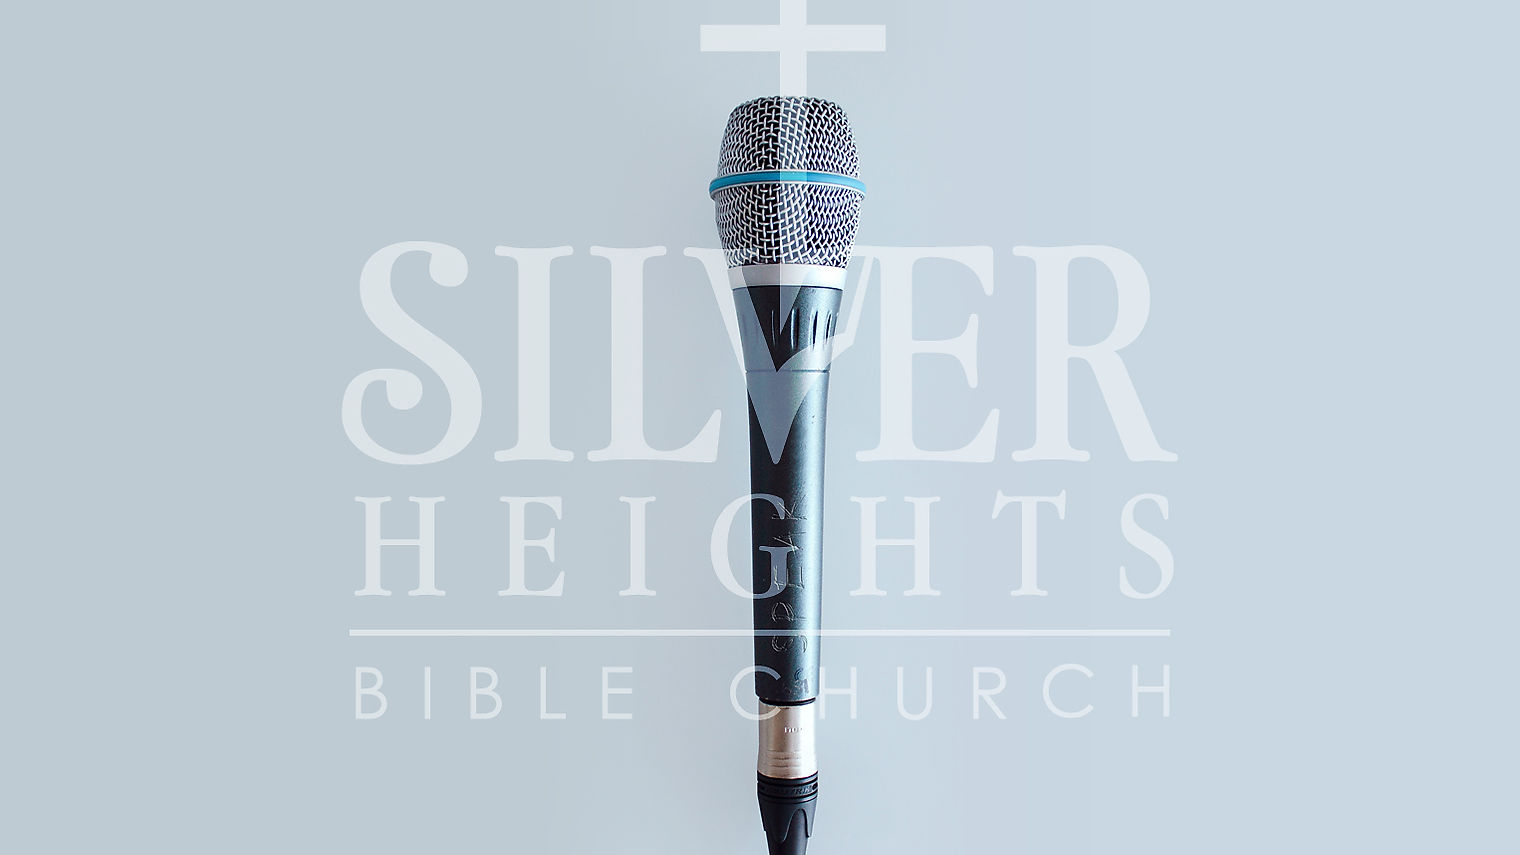 Silver Heights Bible Church